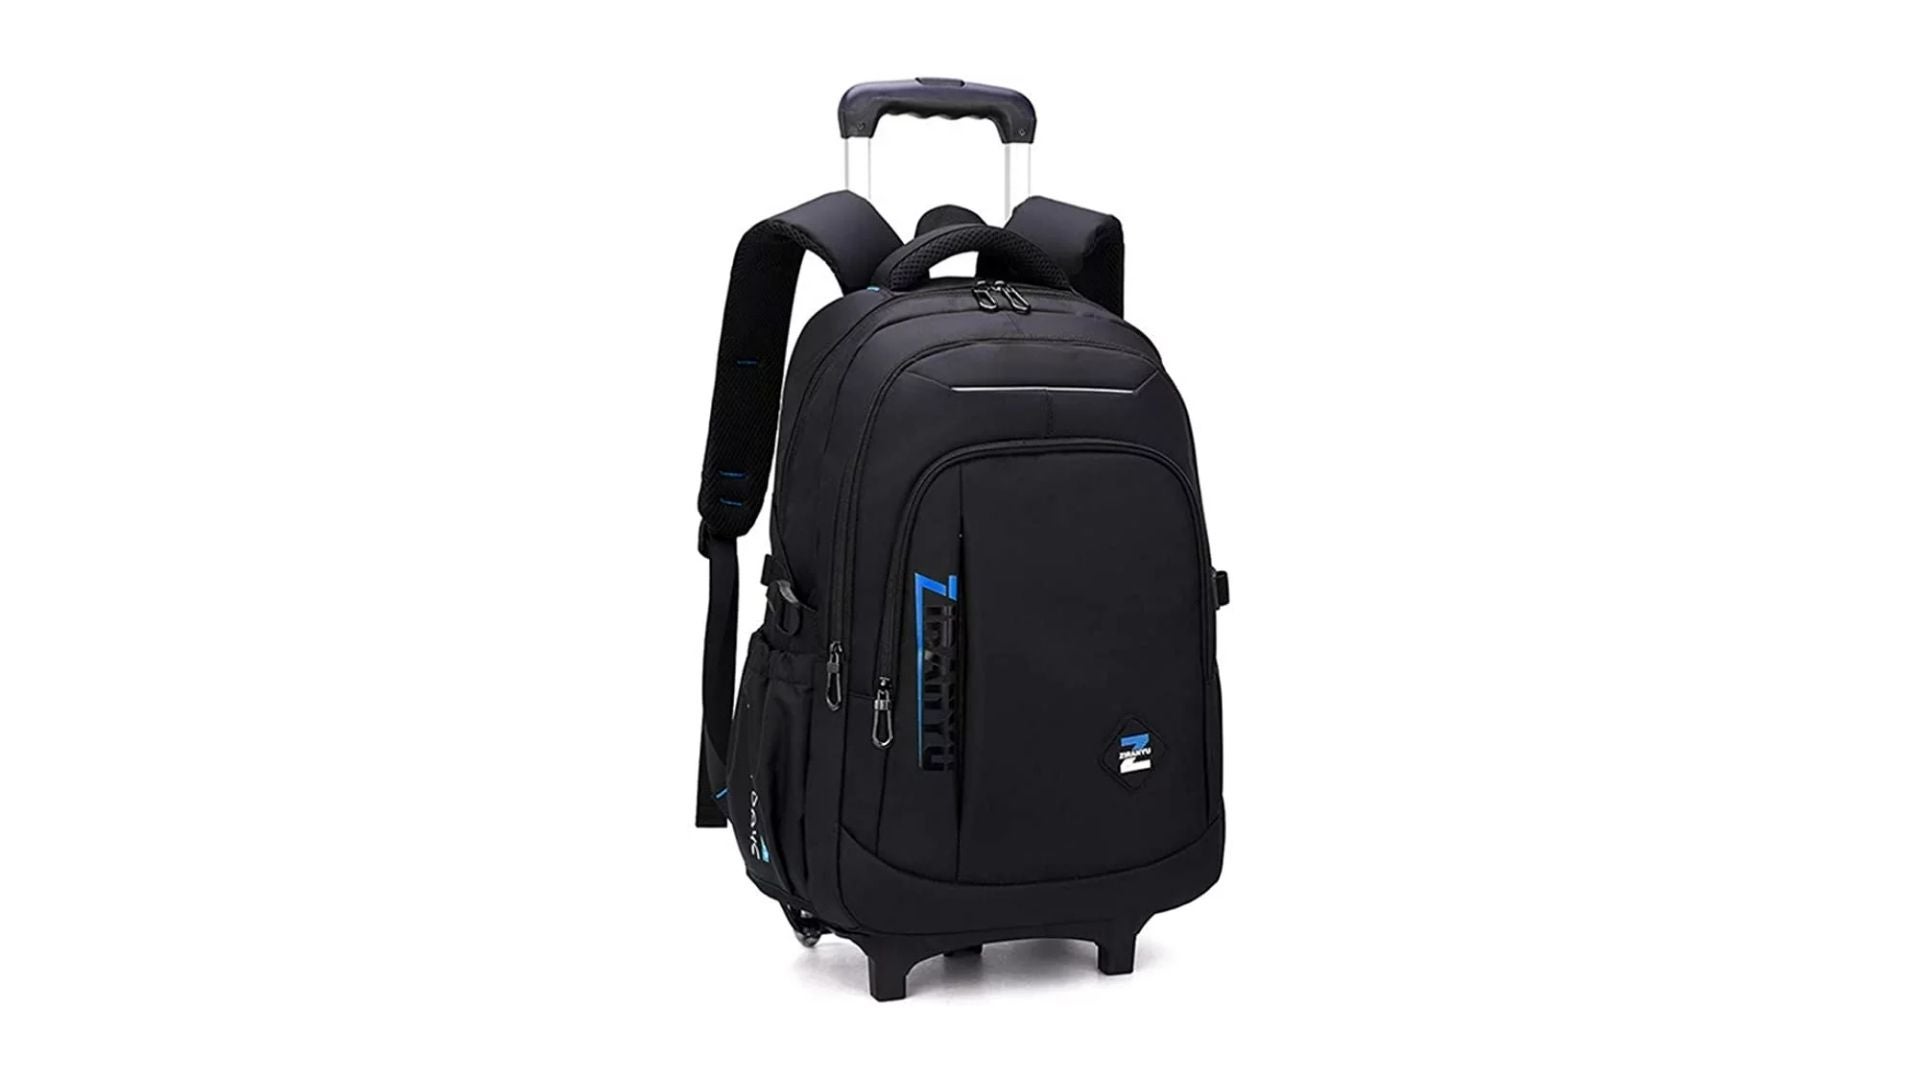 Vidoscla Trolley Backpack